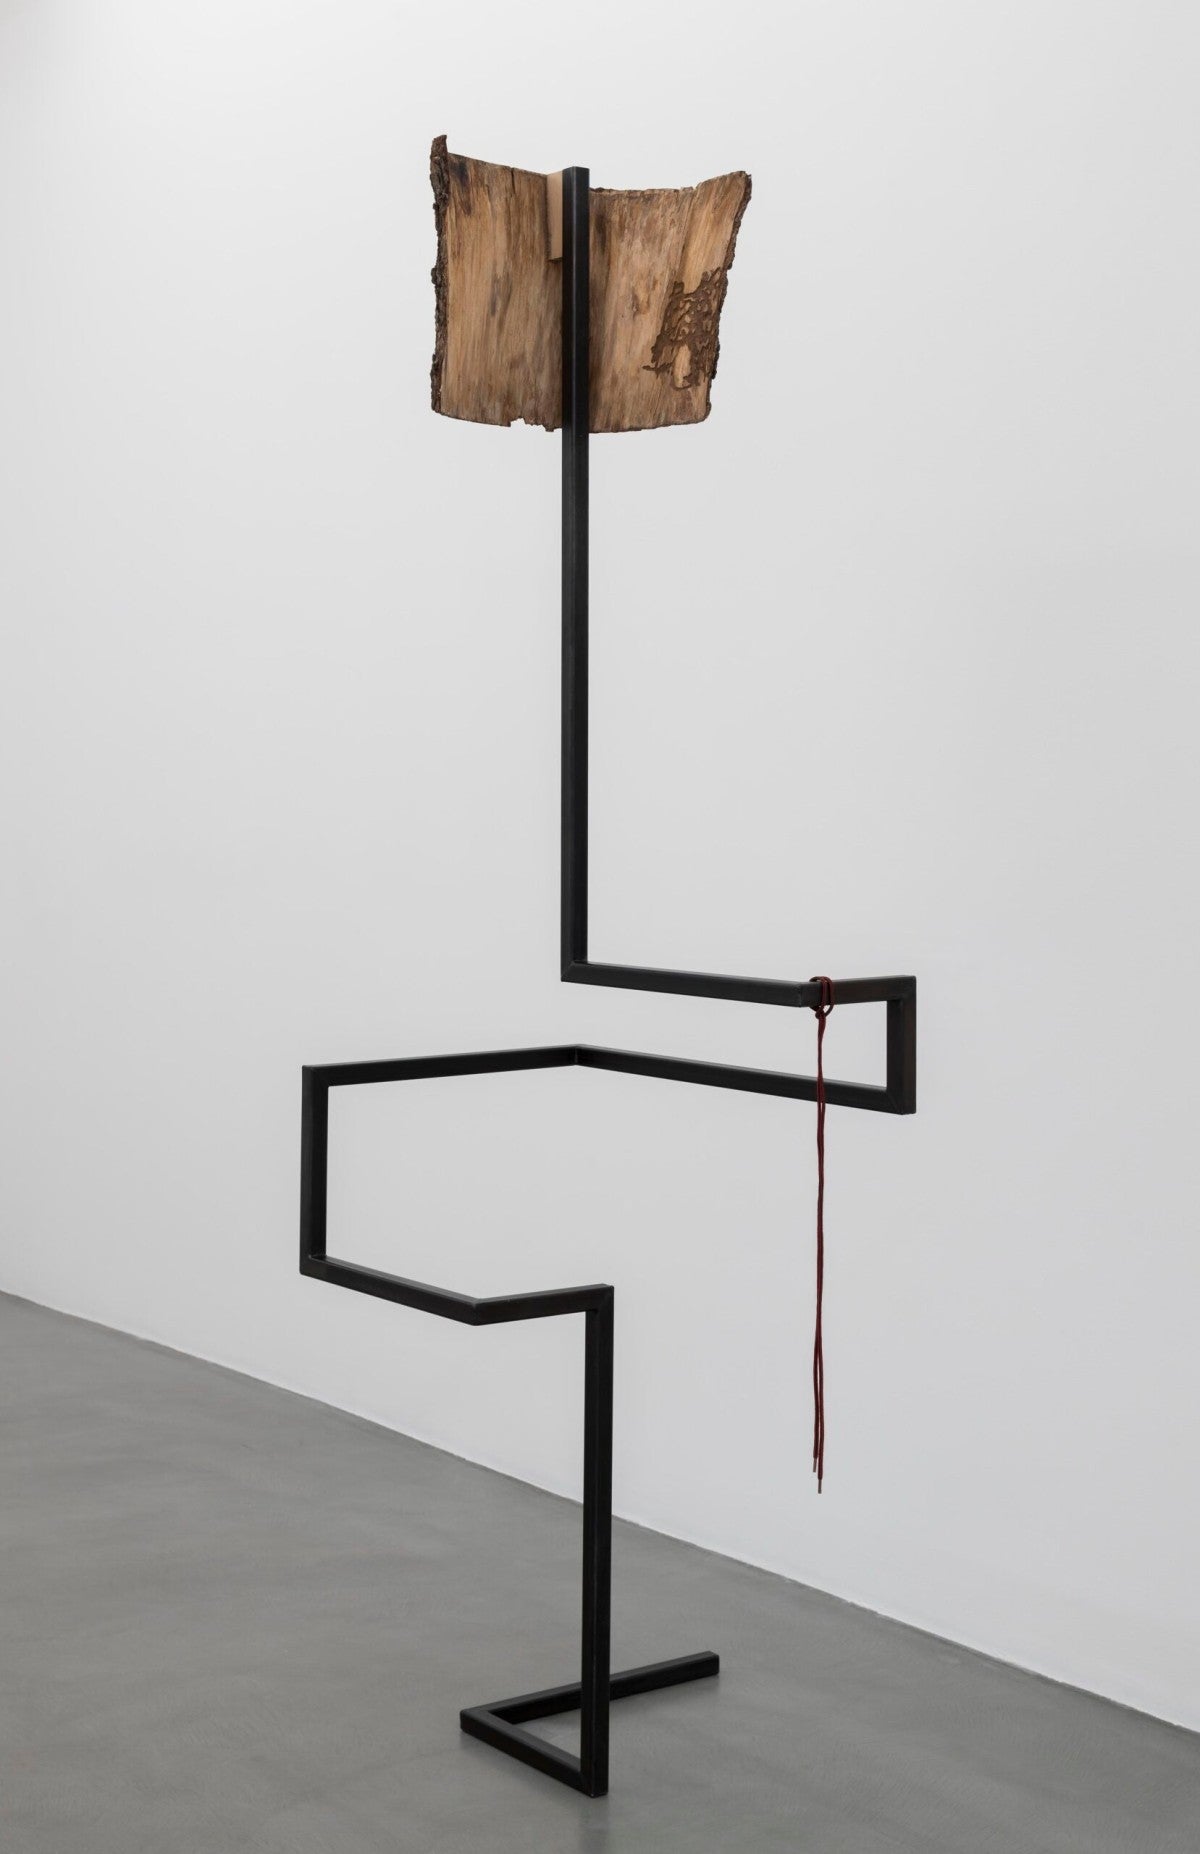 June Self, 2019, steel, bark, lace
François Doury